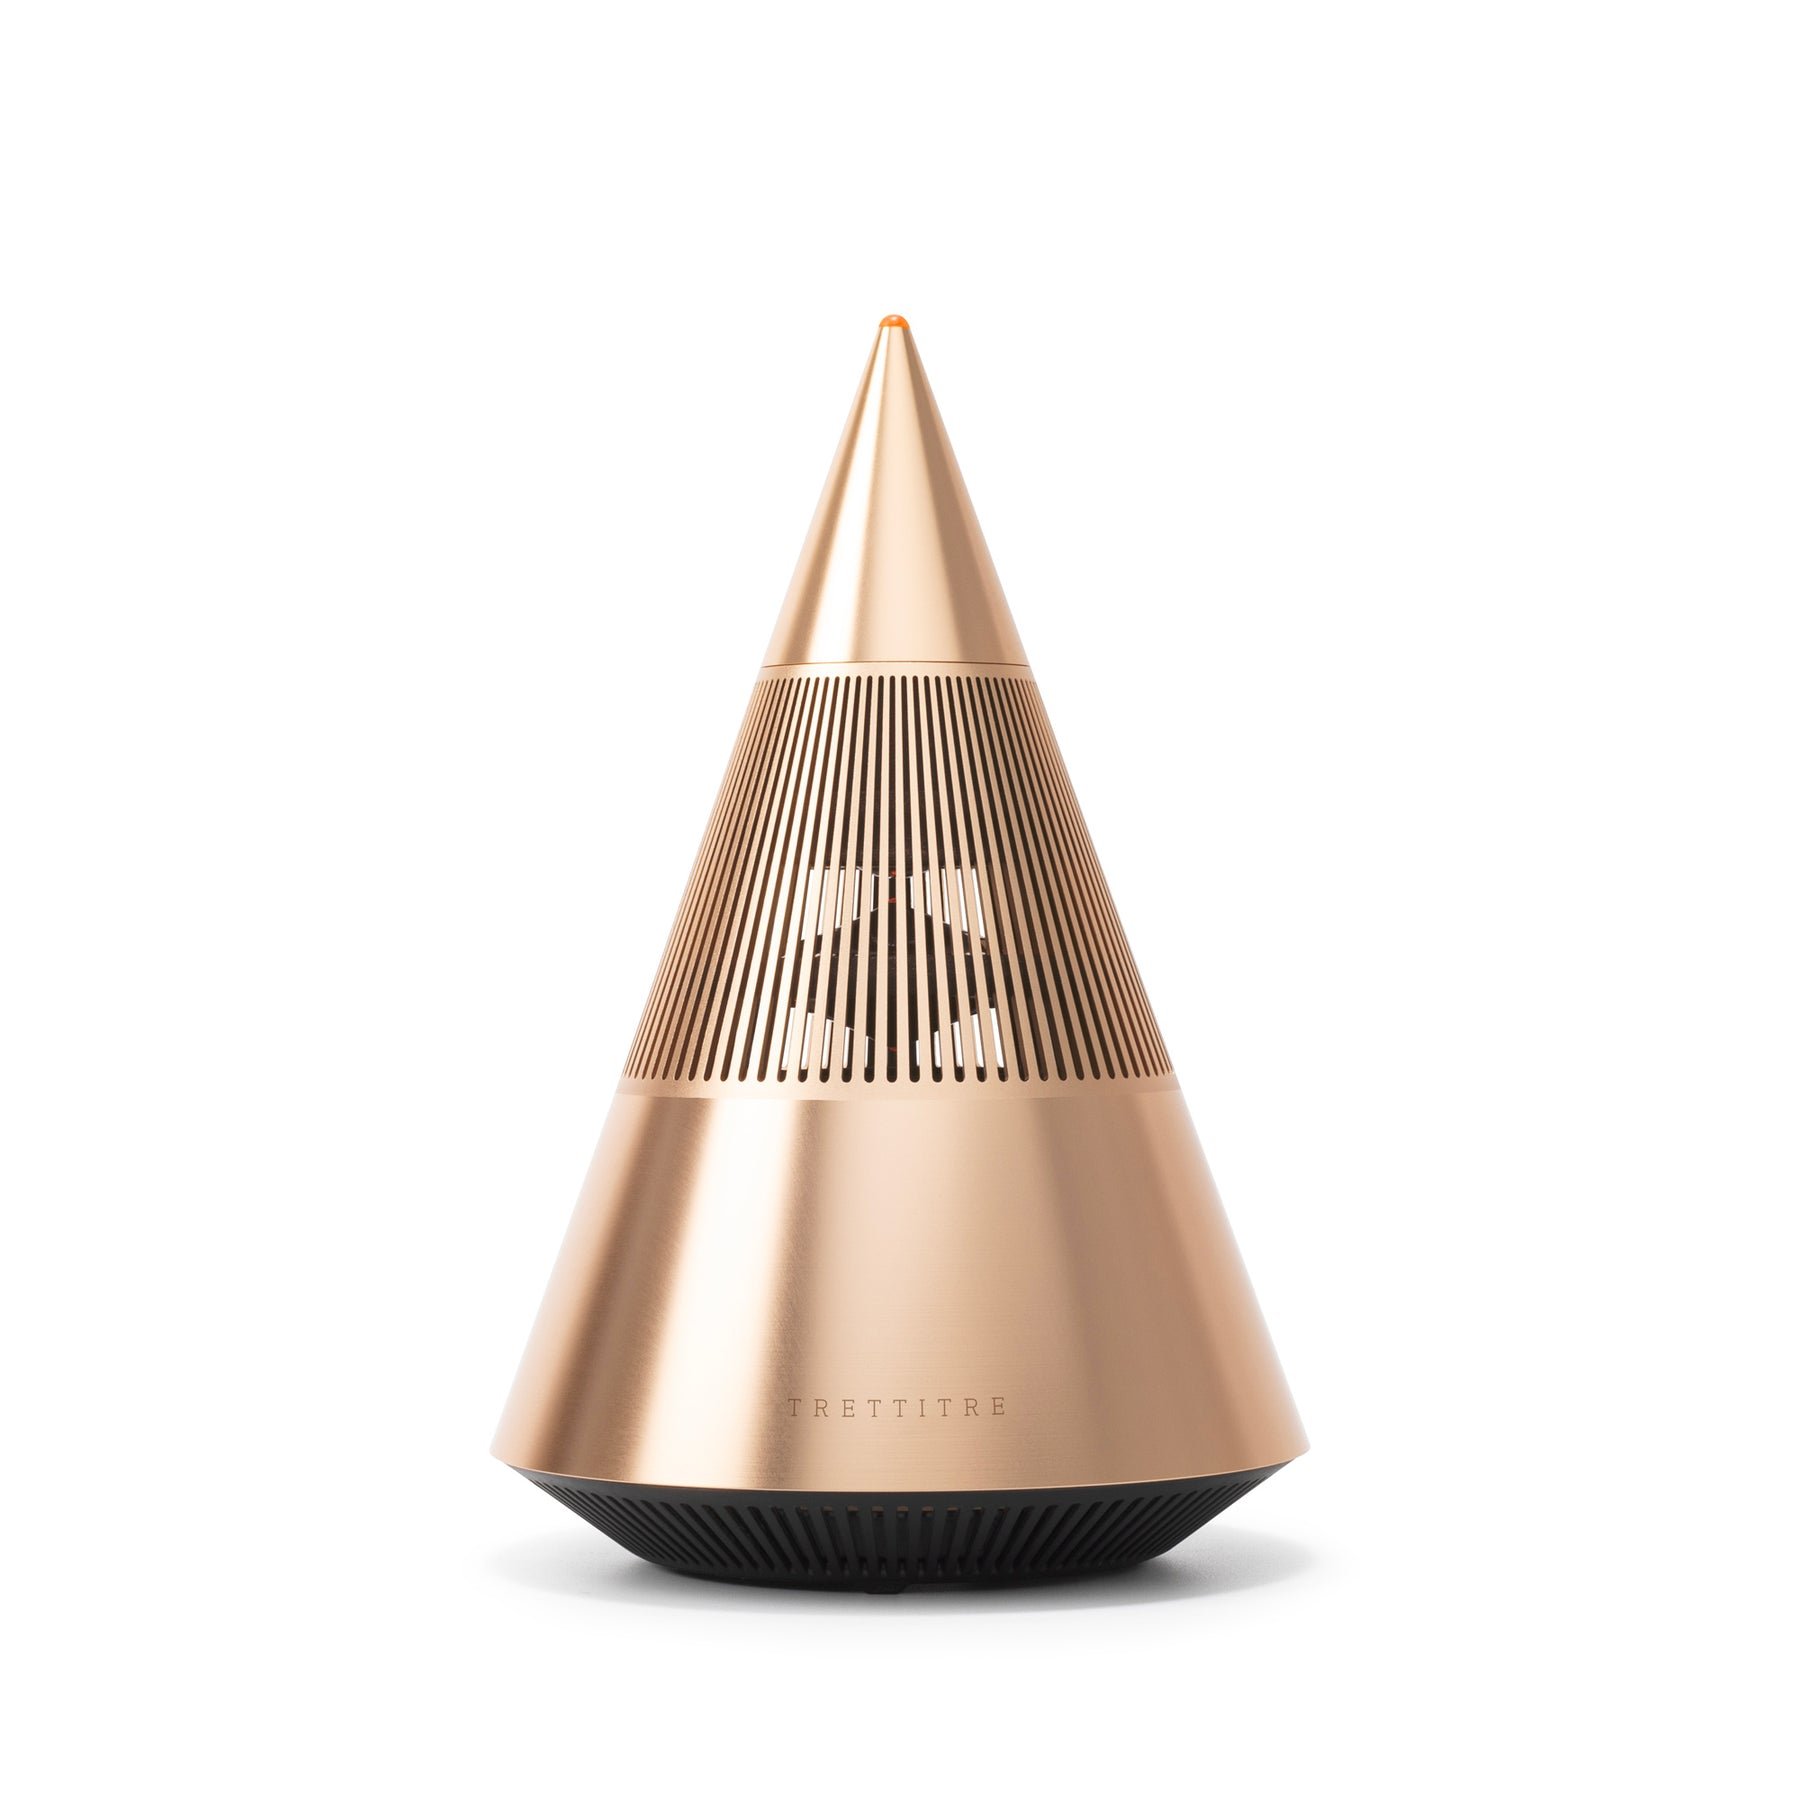 Портативная Bluetooth-колонка Trettitre TreSound Mini Golden